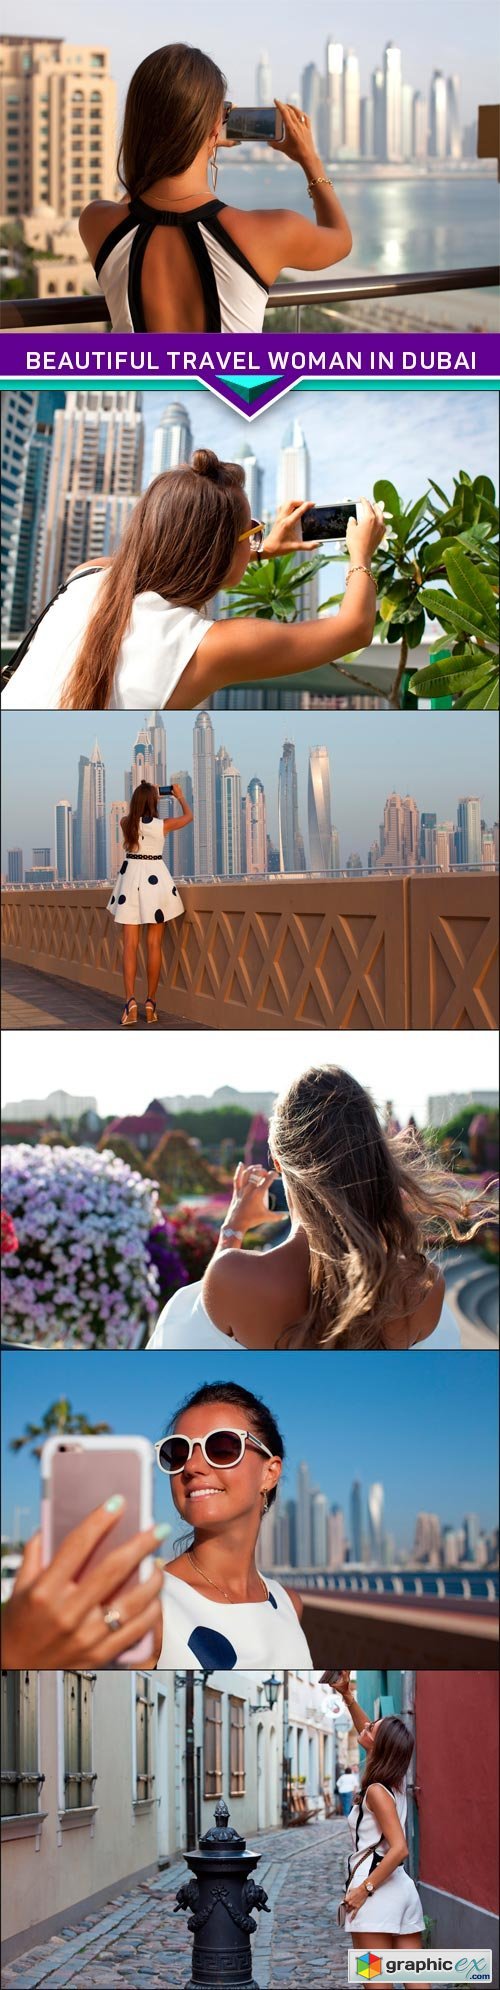 Beautiful travel woman in Dubai 6x JPEG